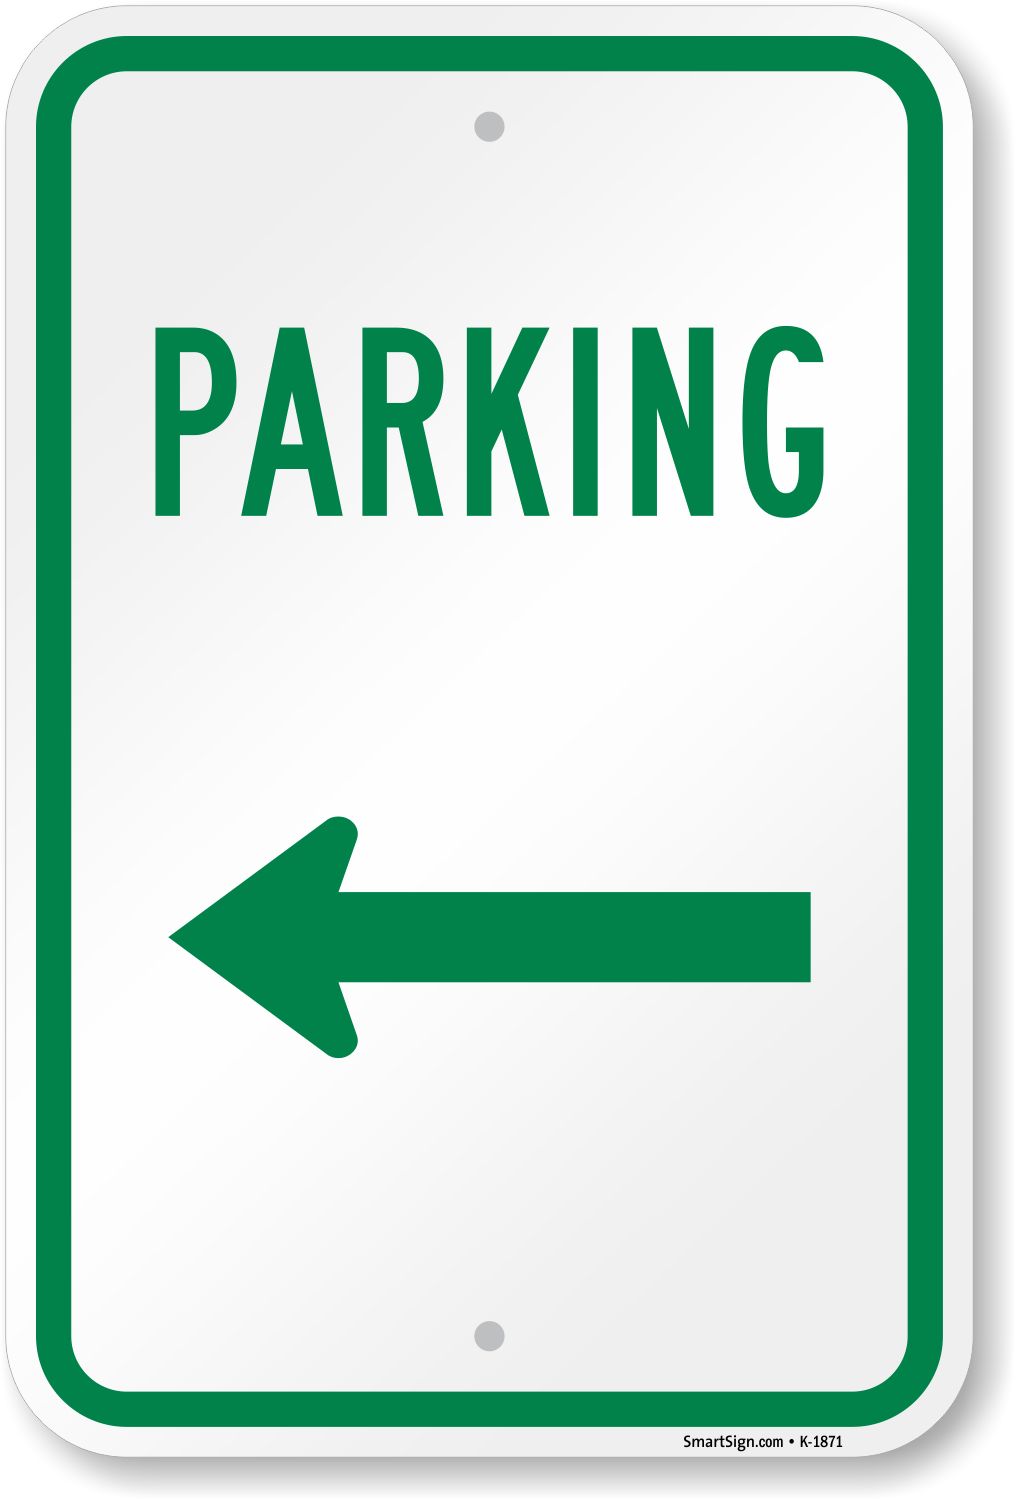 Parking Signs RESERVED PARKING ARROW LEFT 